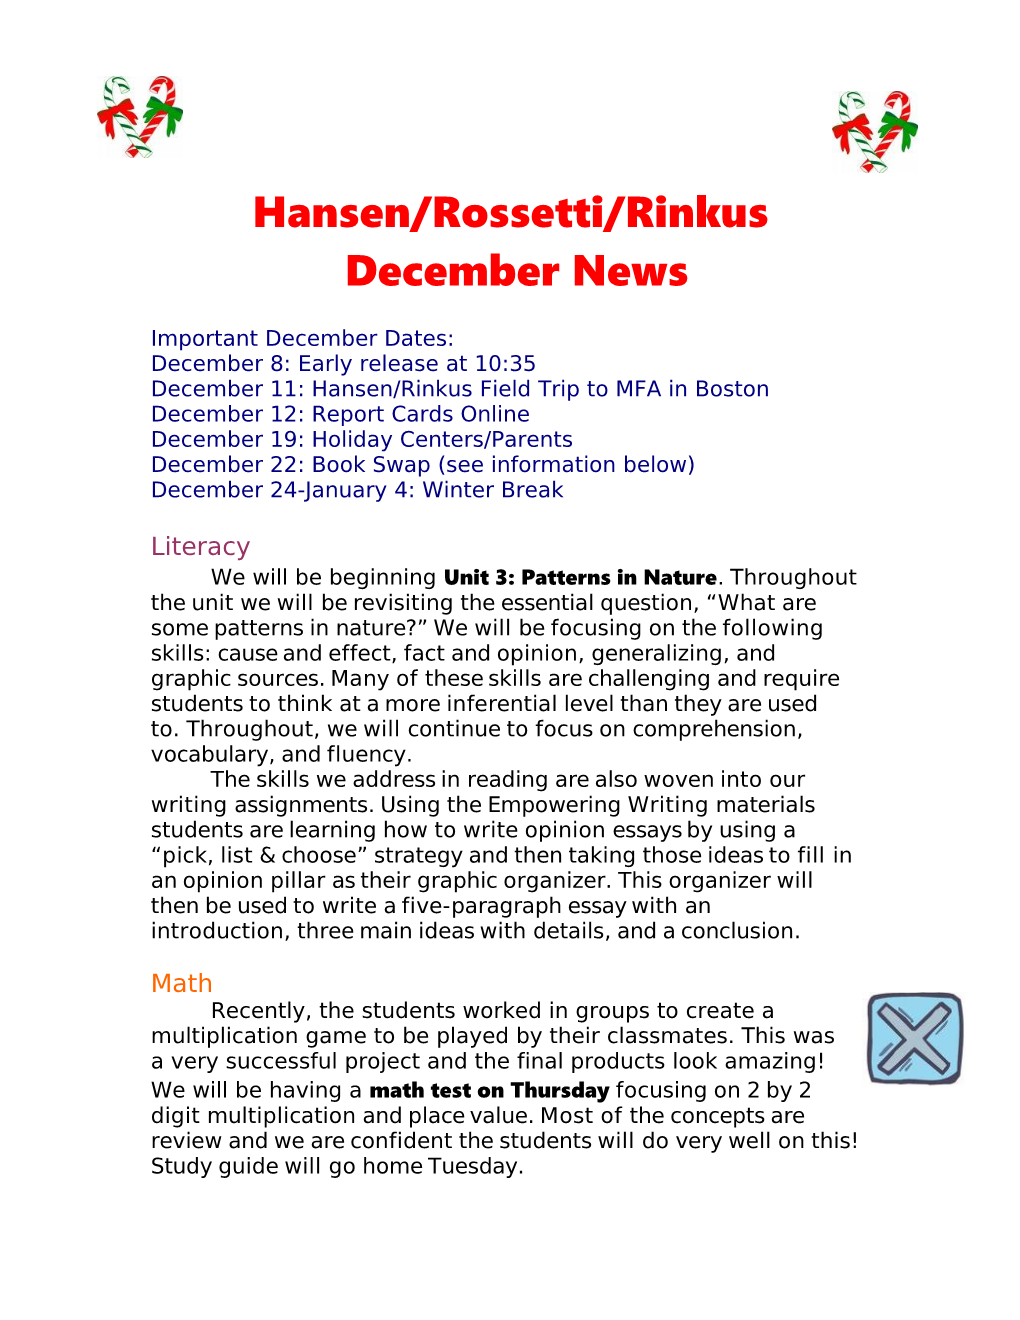 Hansen/Rossetti/Rinkus